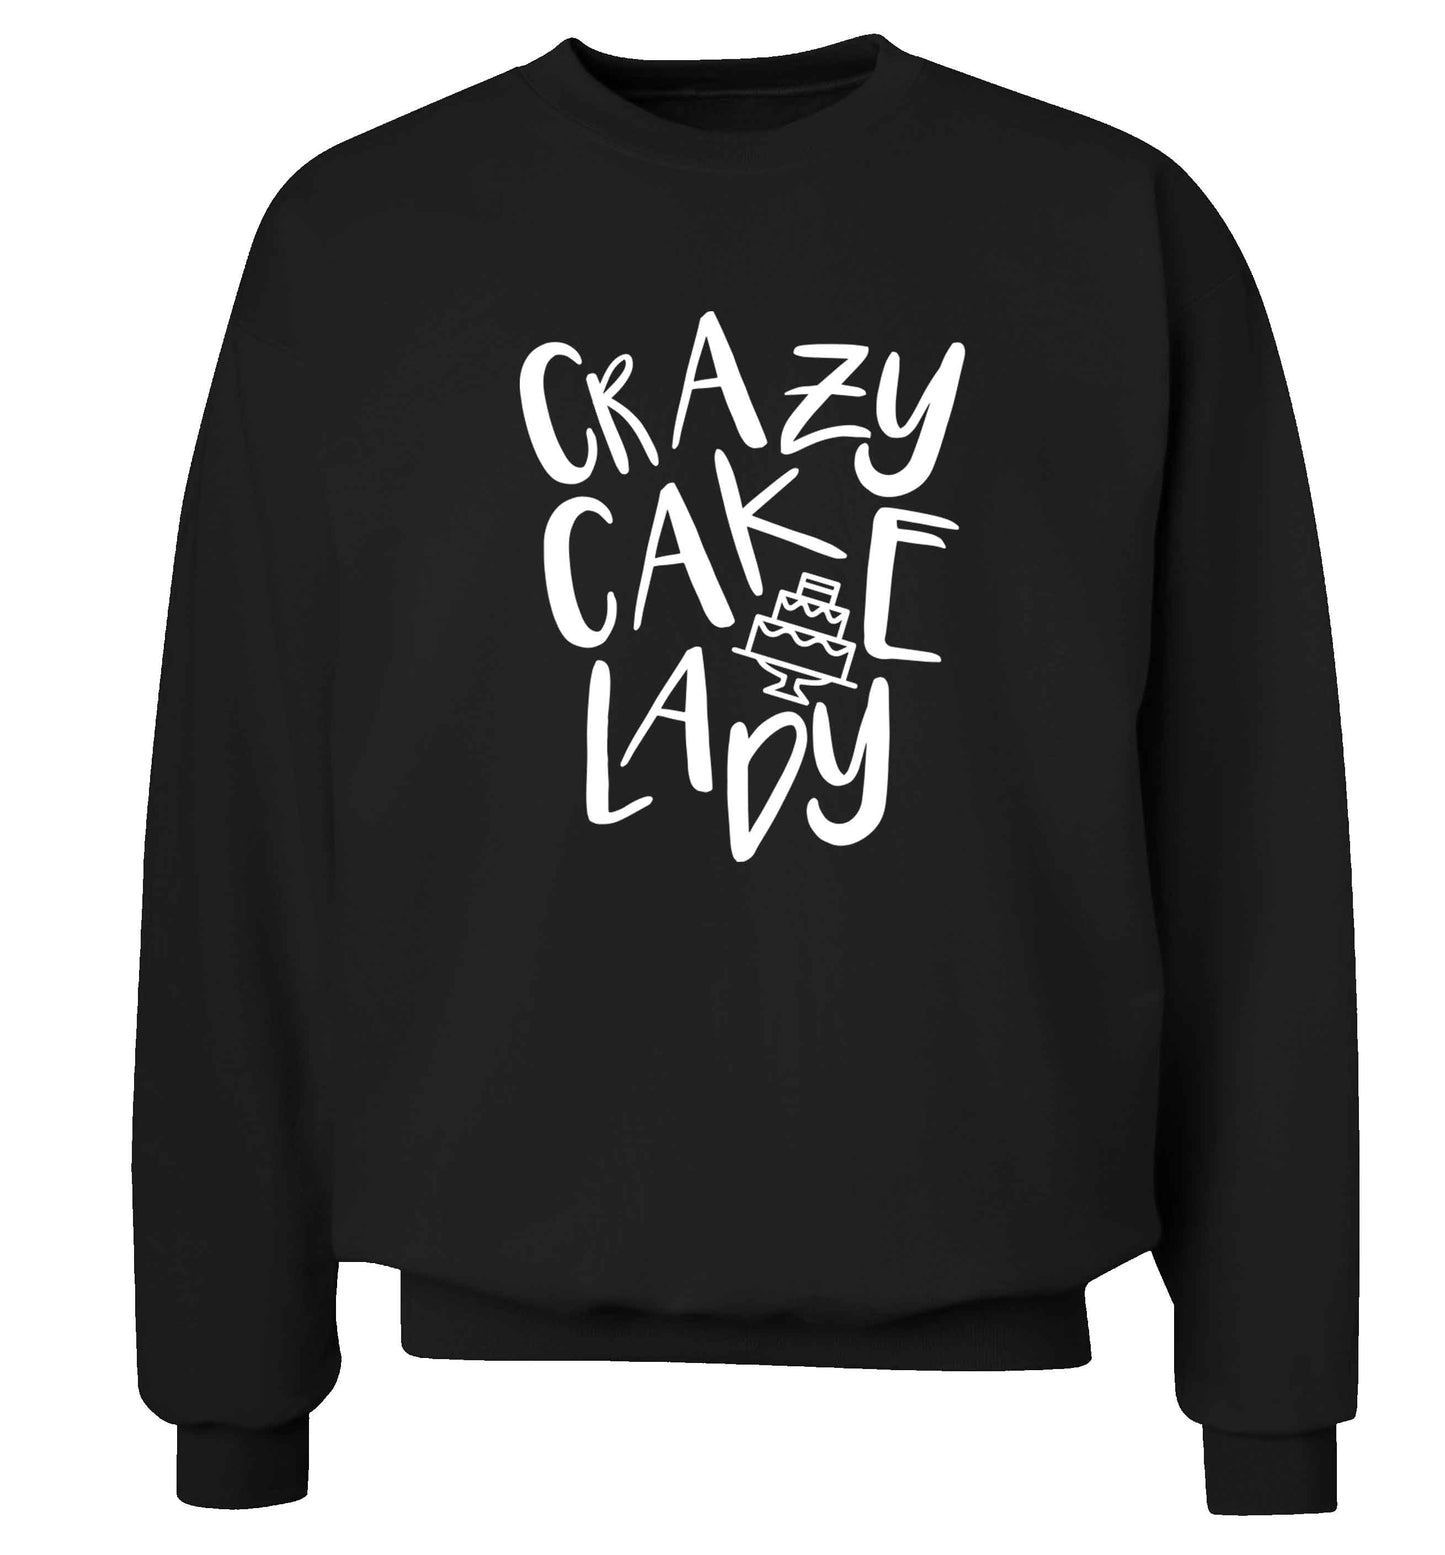 Crazy cake lady Adult's unisex black Sweater 2XL